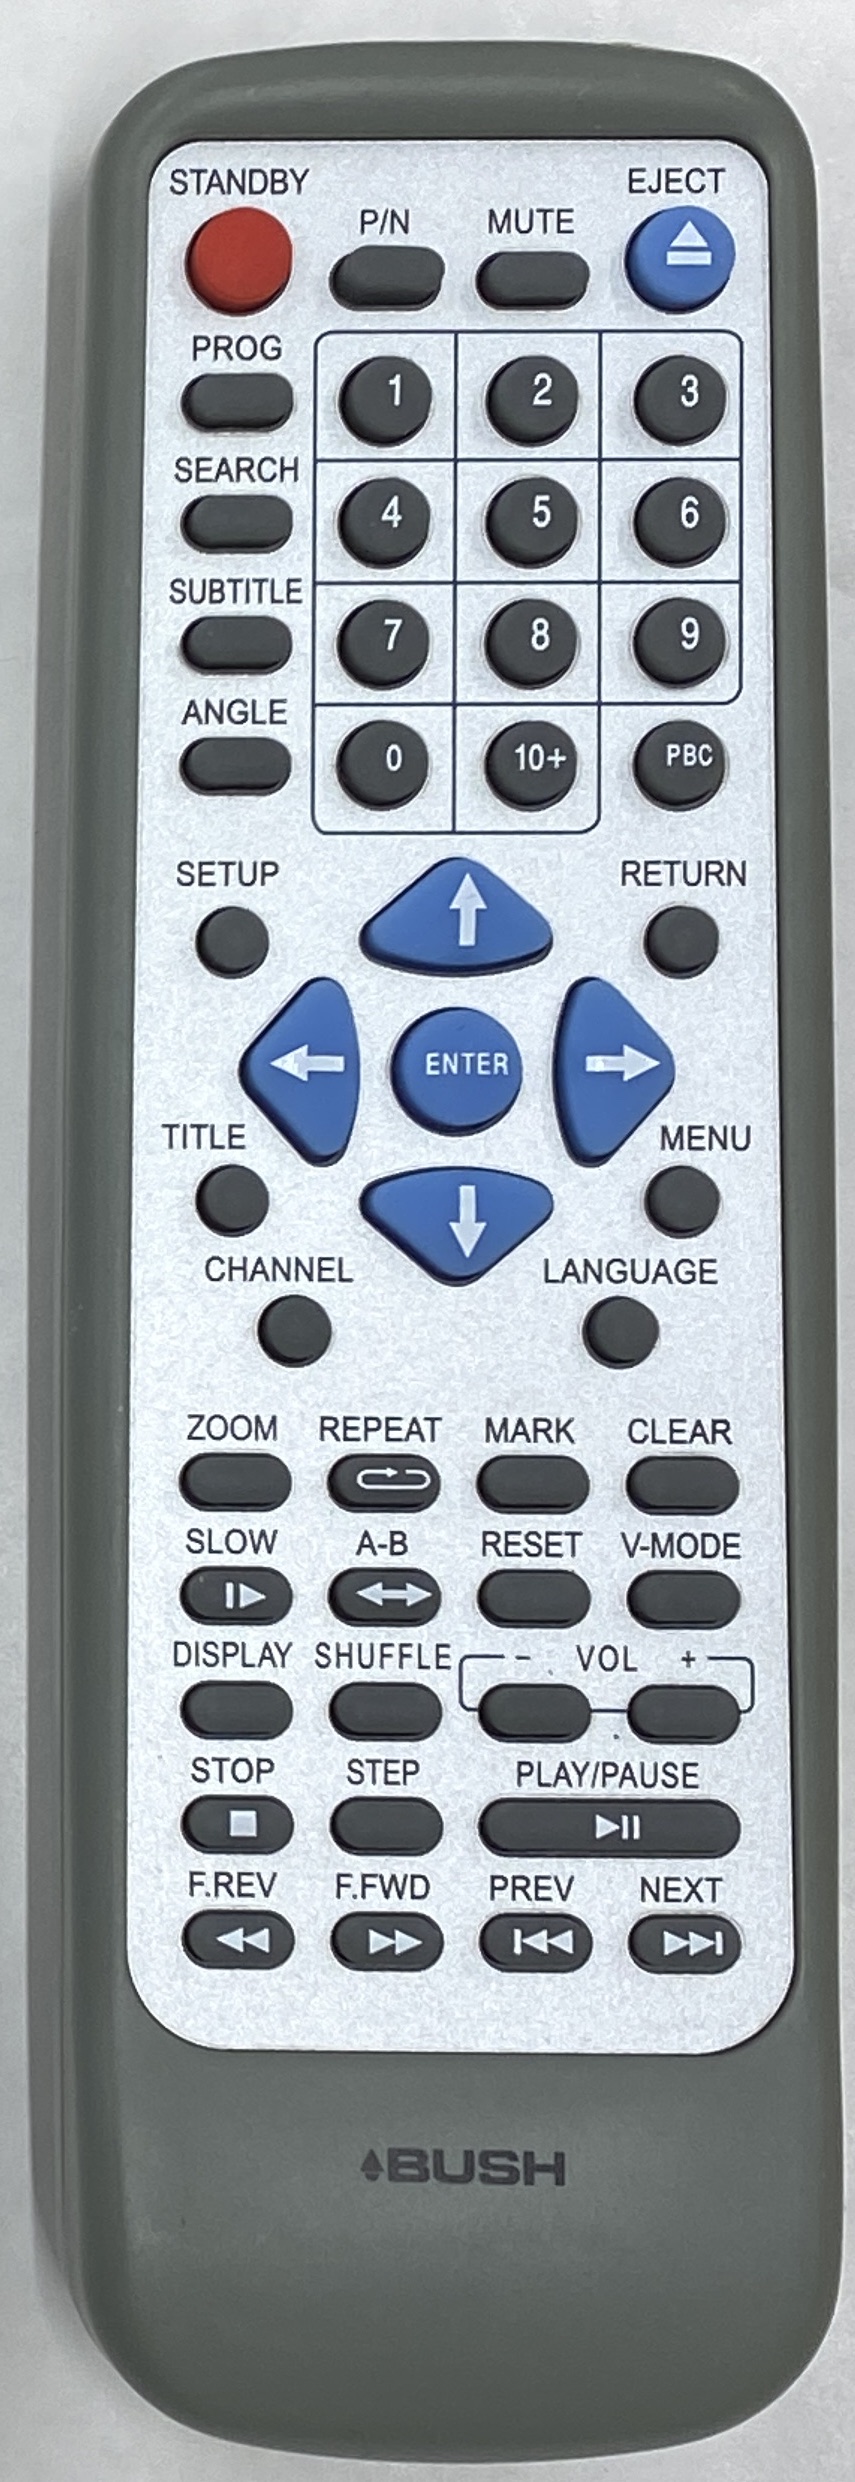 BUSH DVD2054DIVX Remote Control Original